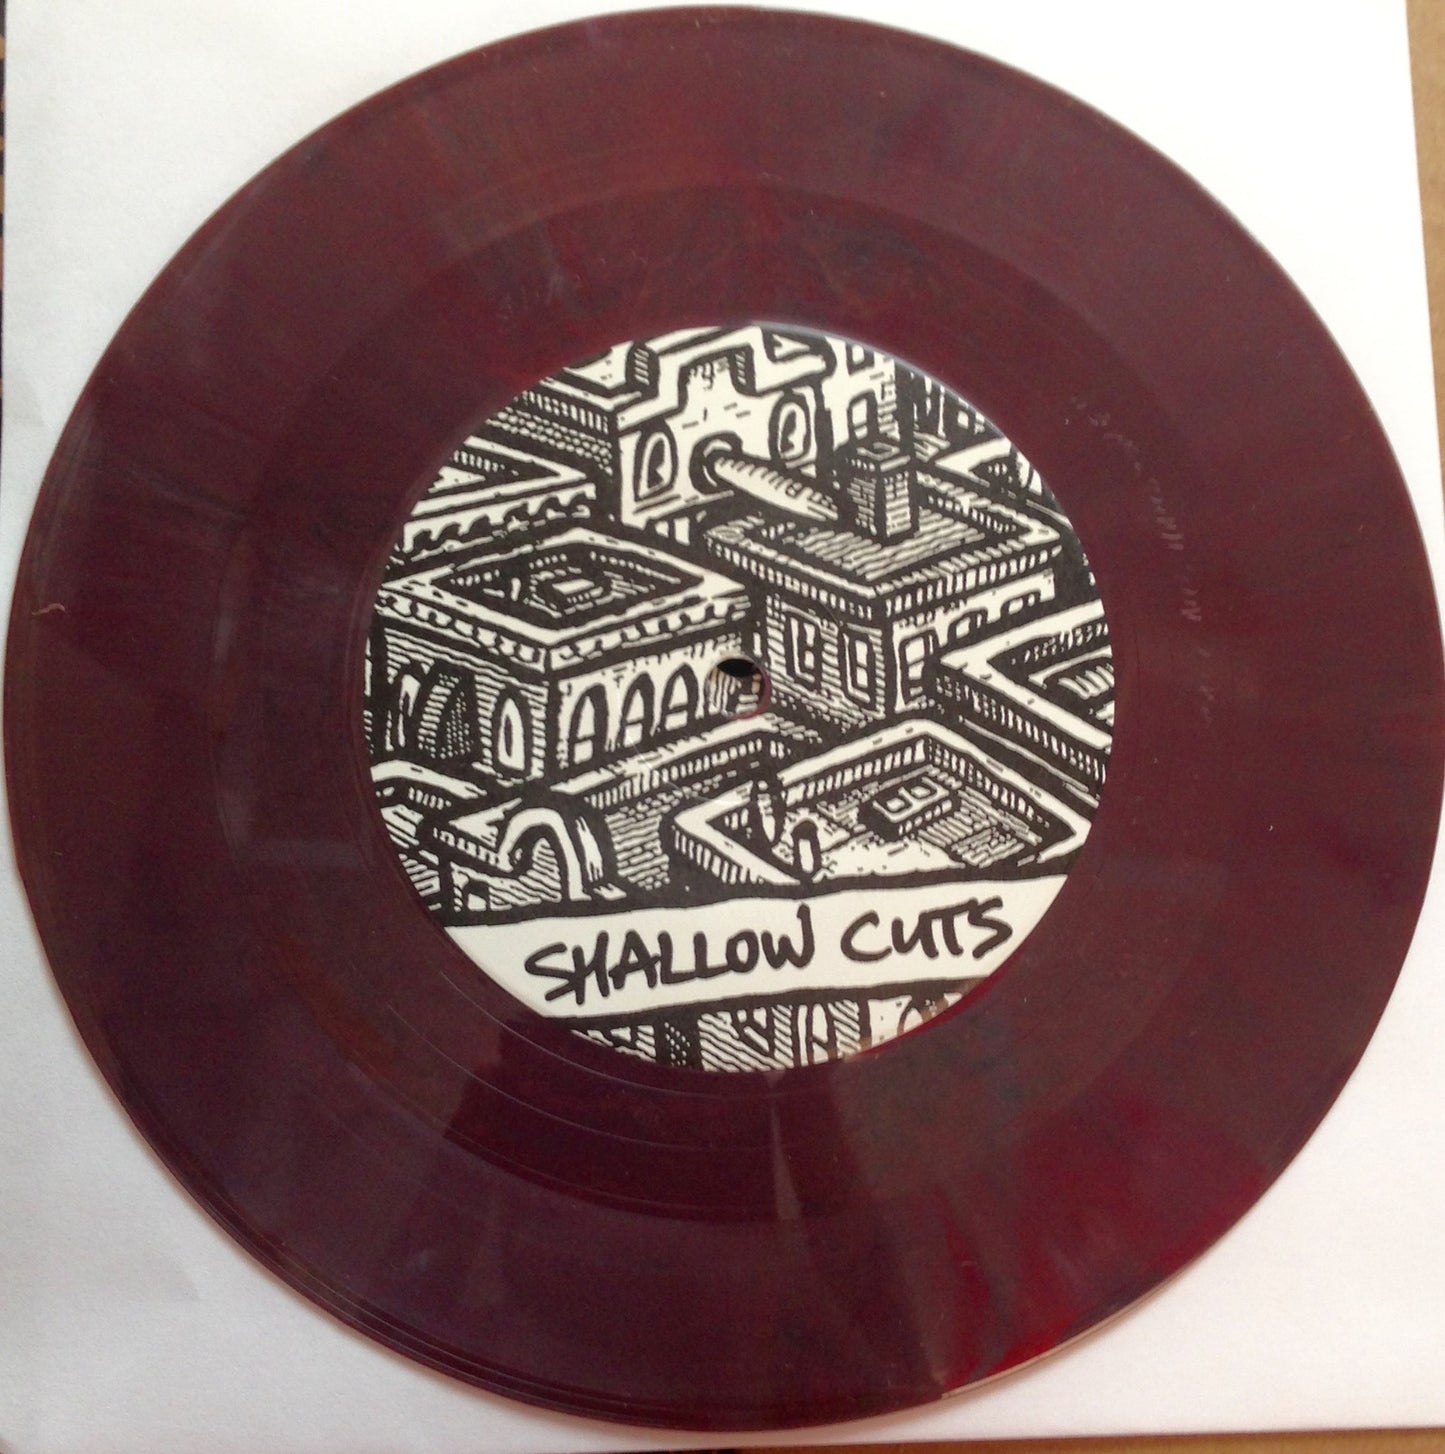 RADON / SHALLOW CUTS "Split"